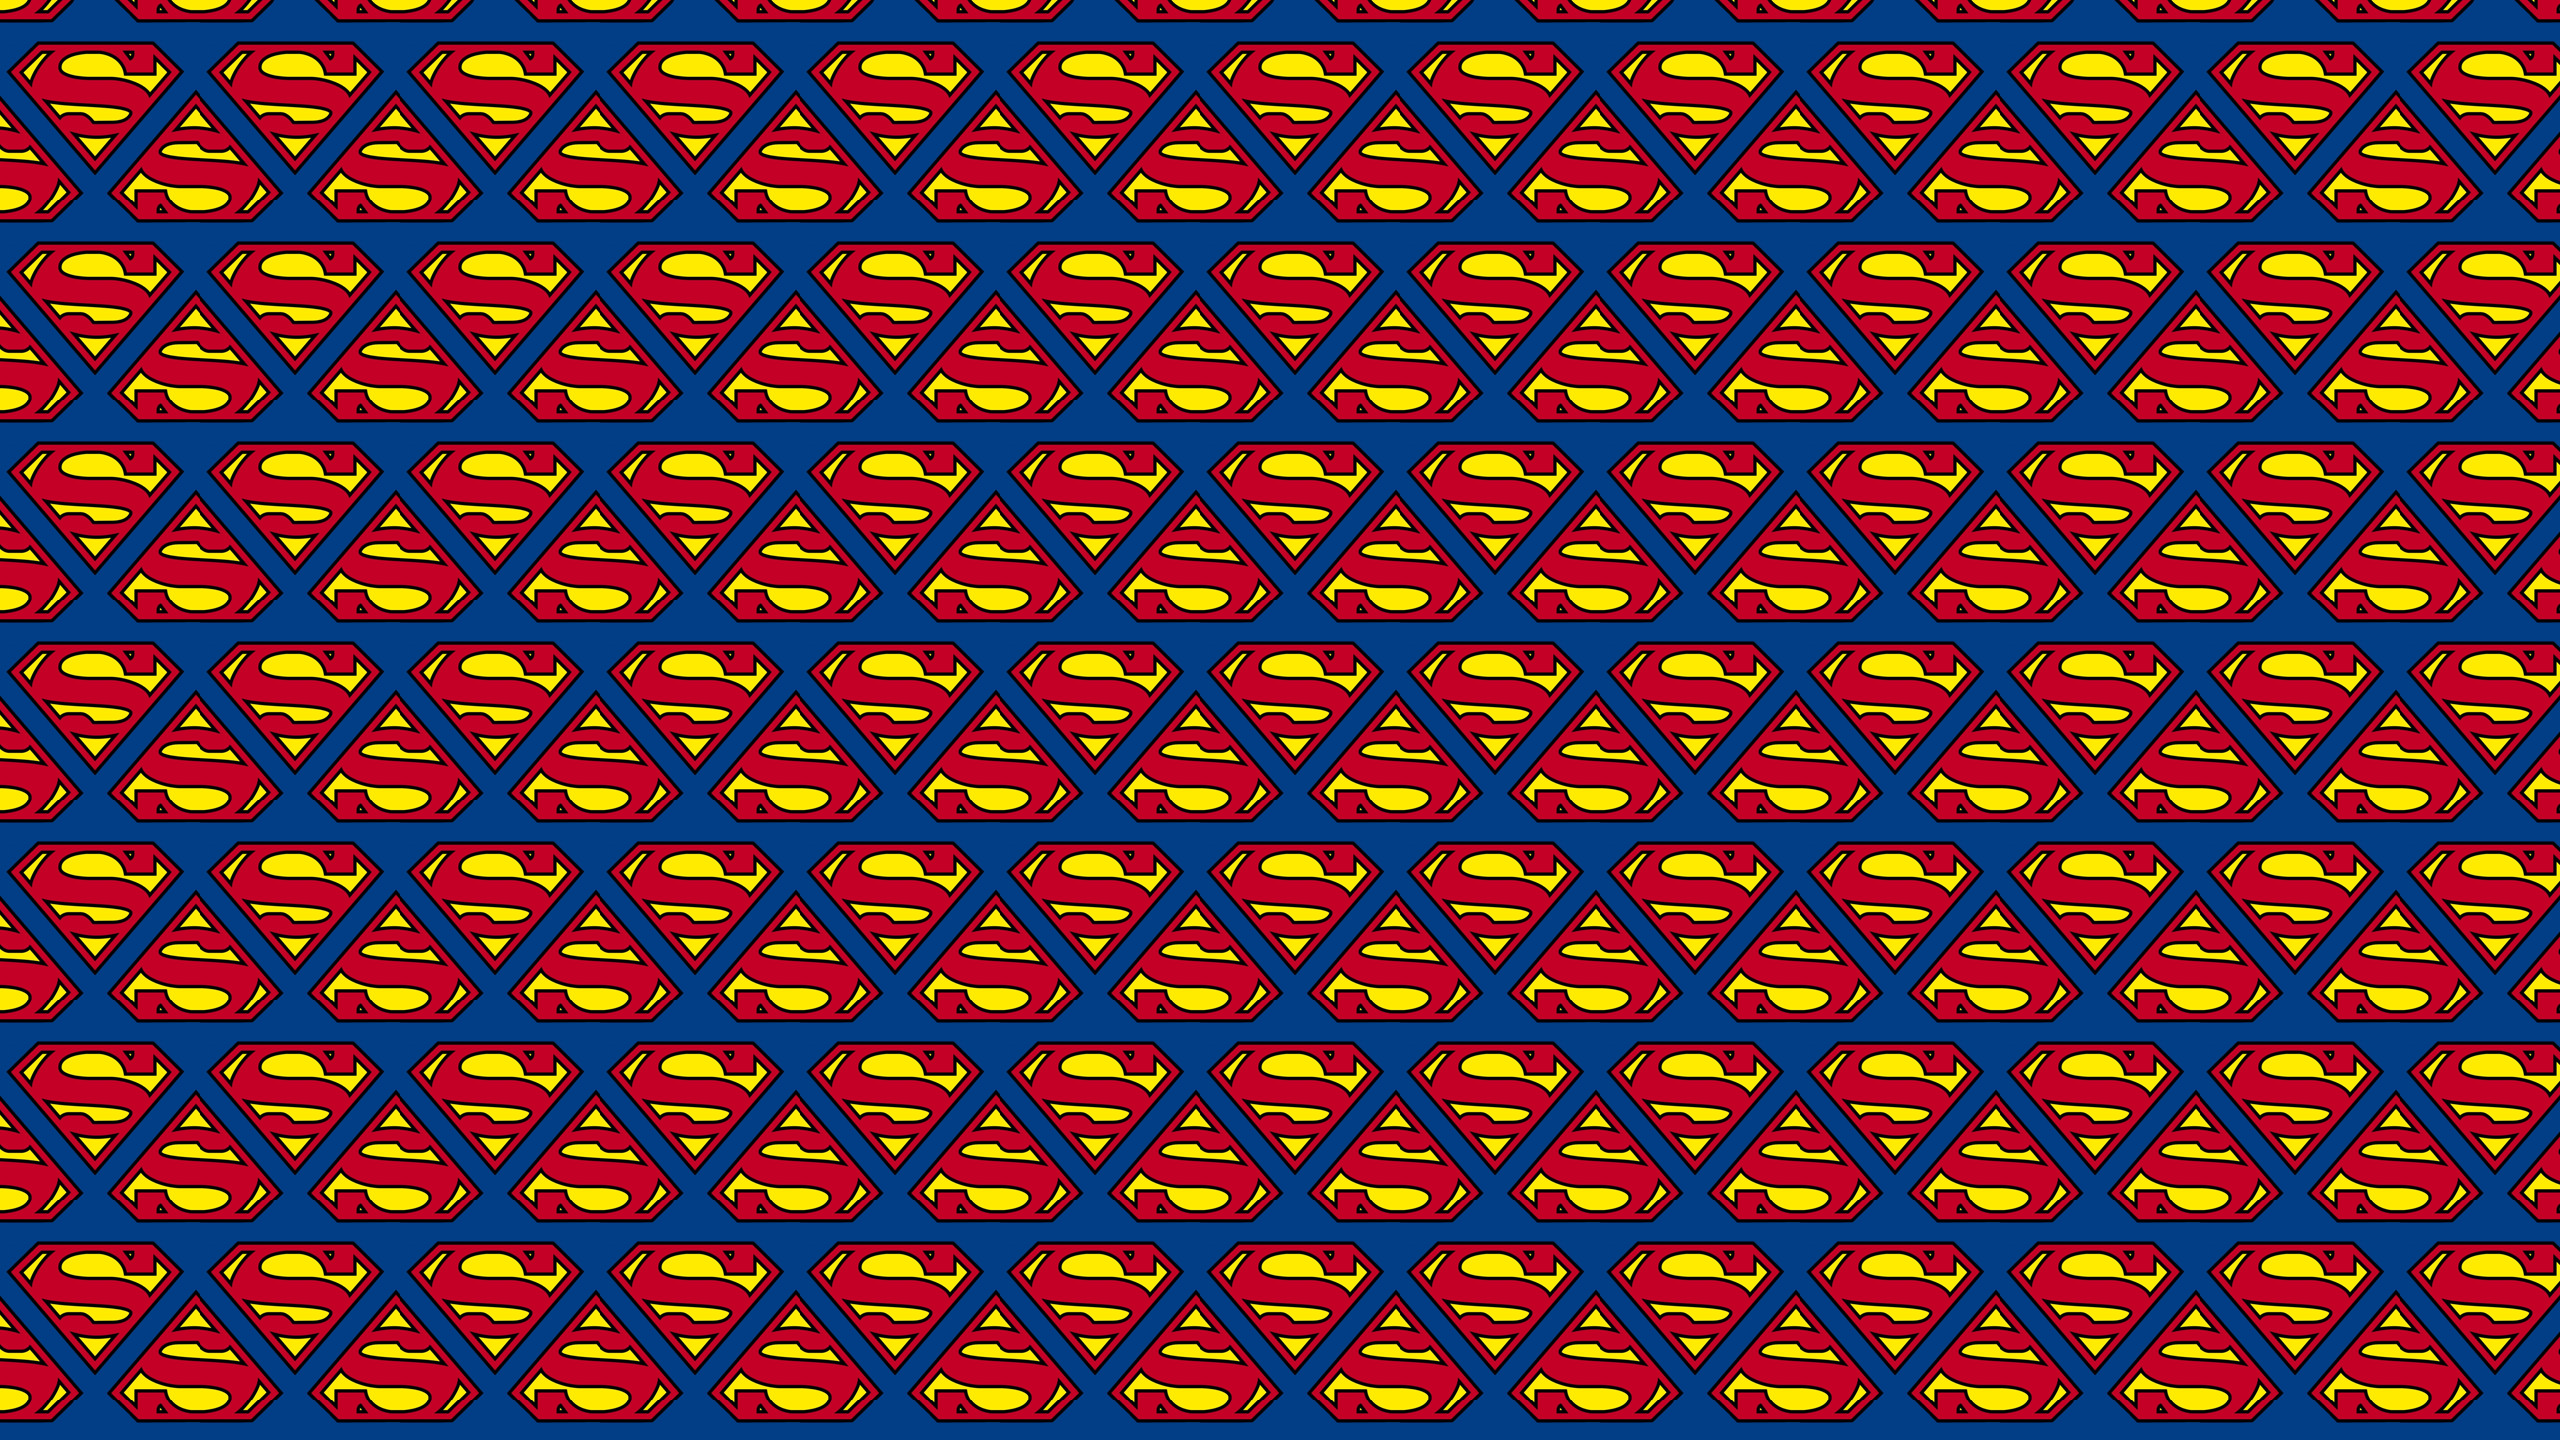 Superman Logos Desktop Wallpaper and Background Image Free